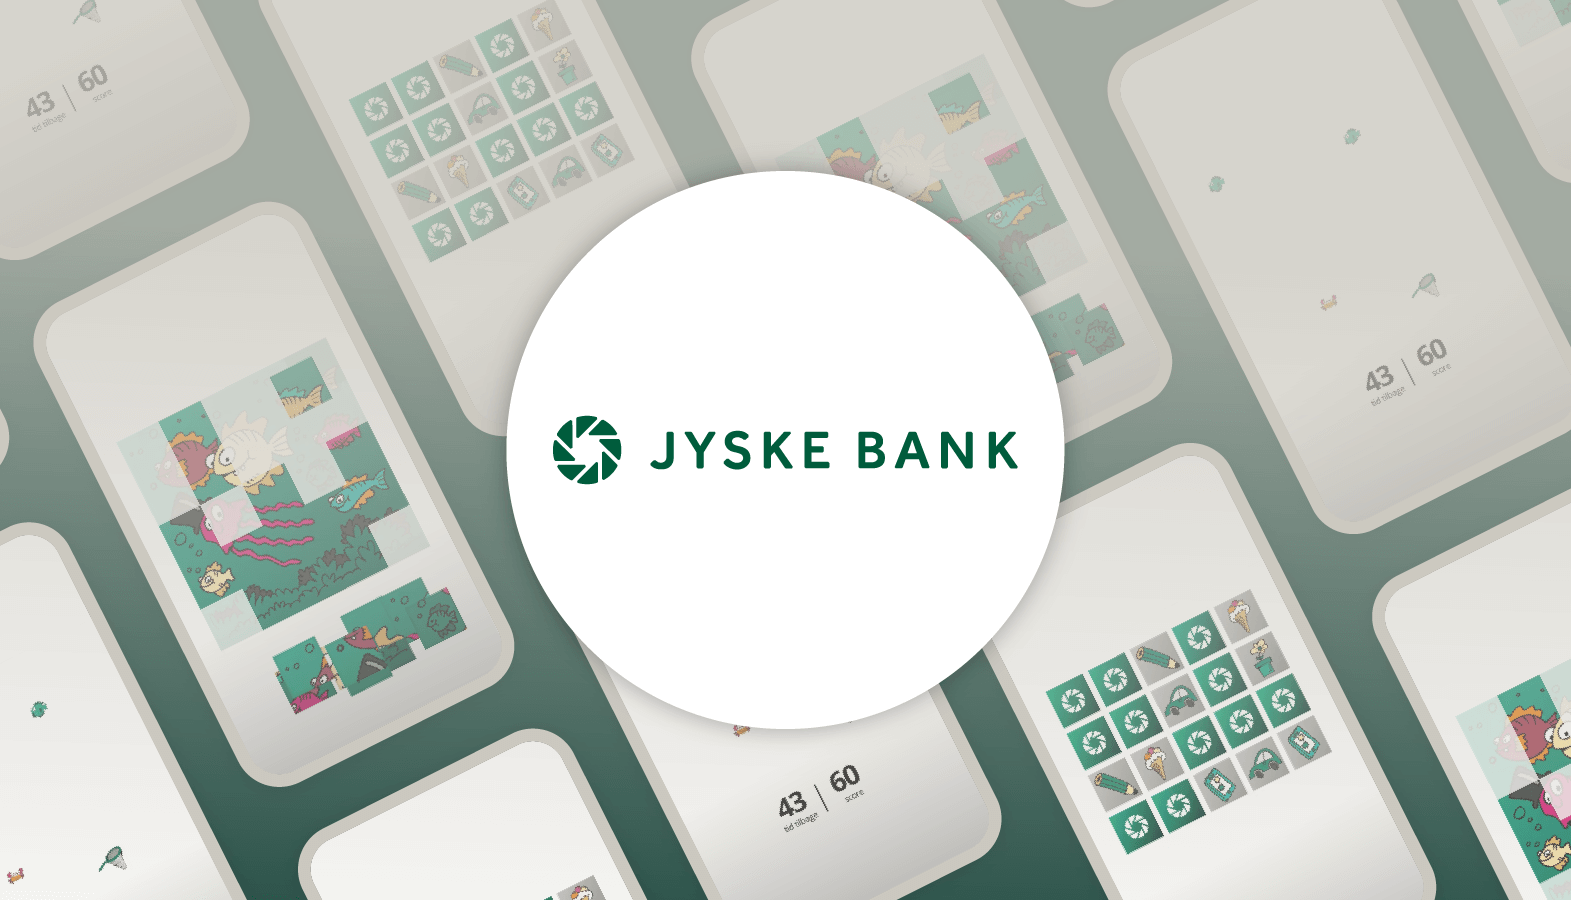 Jyske Bank Customer Story with Playable